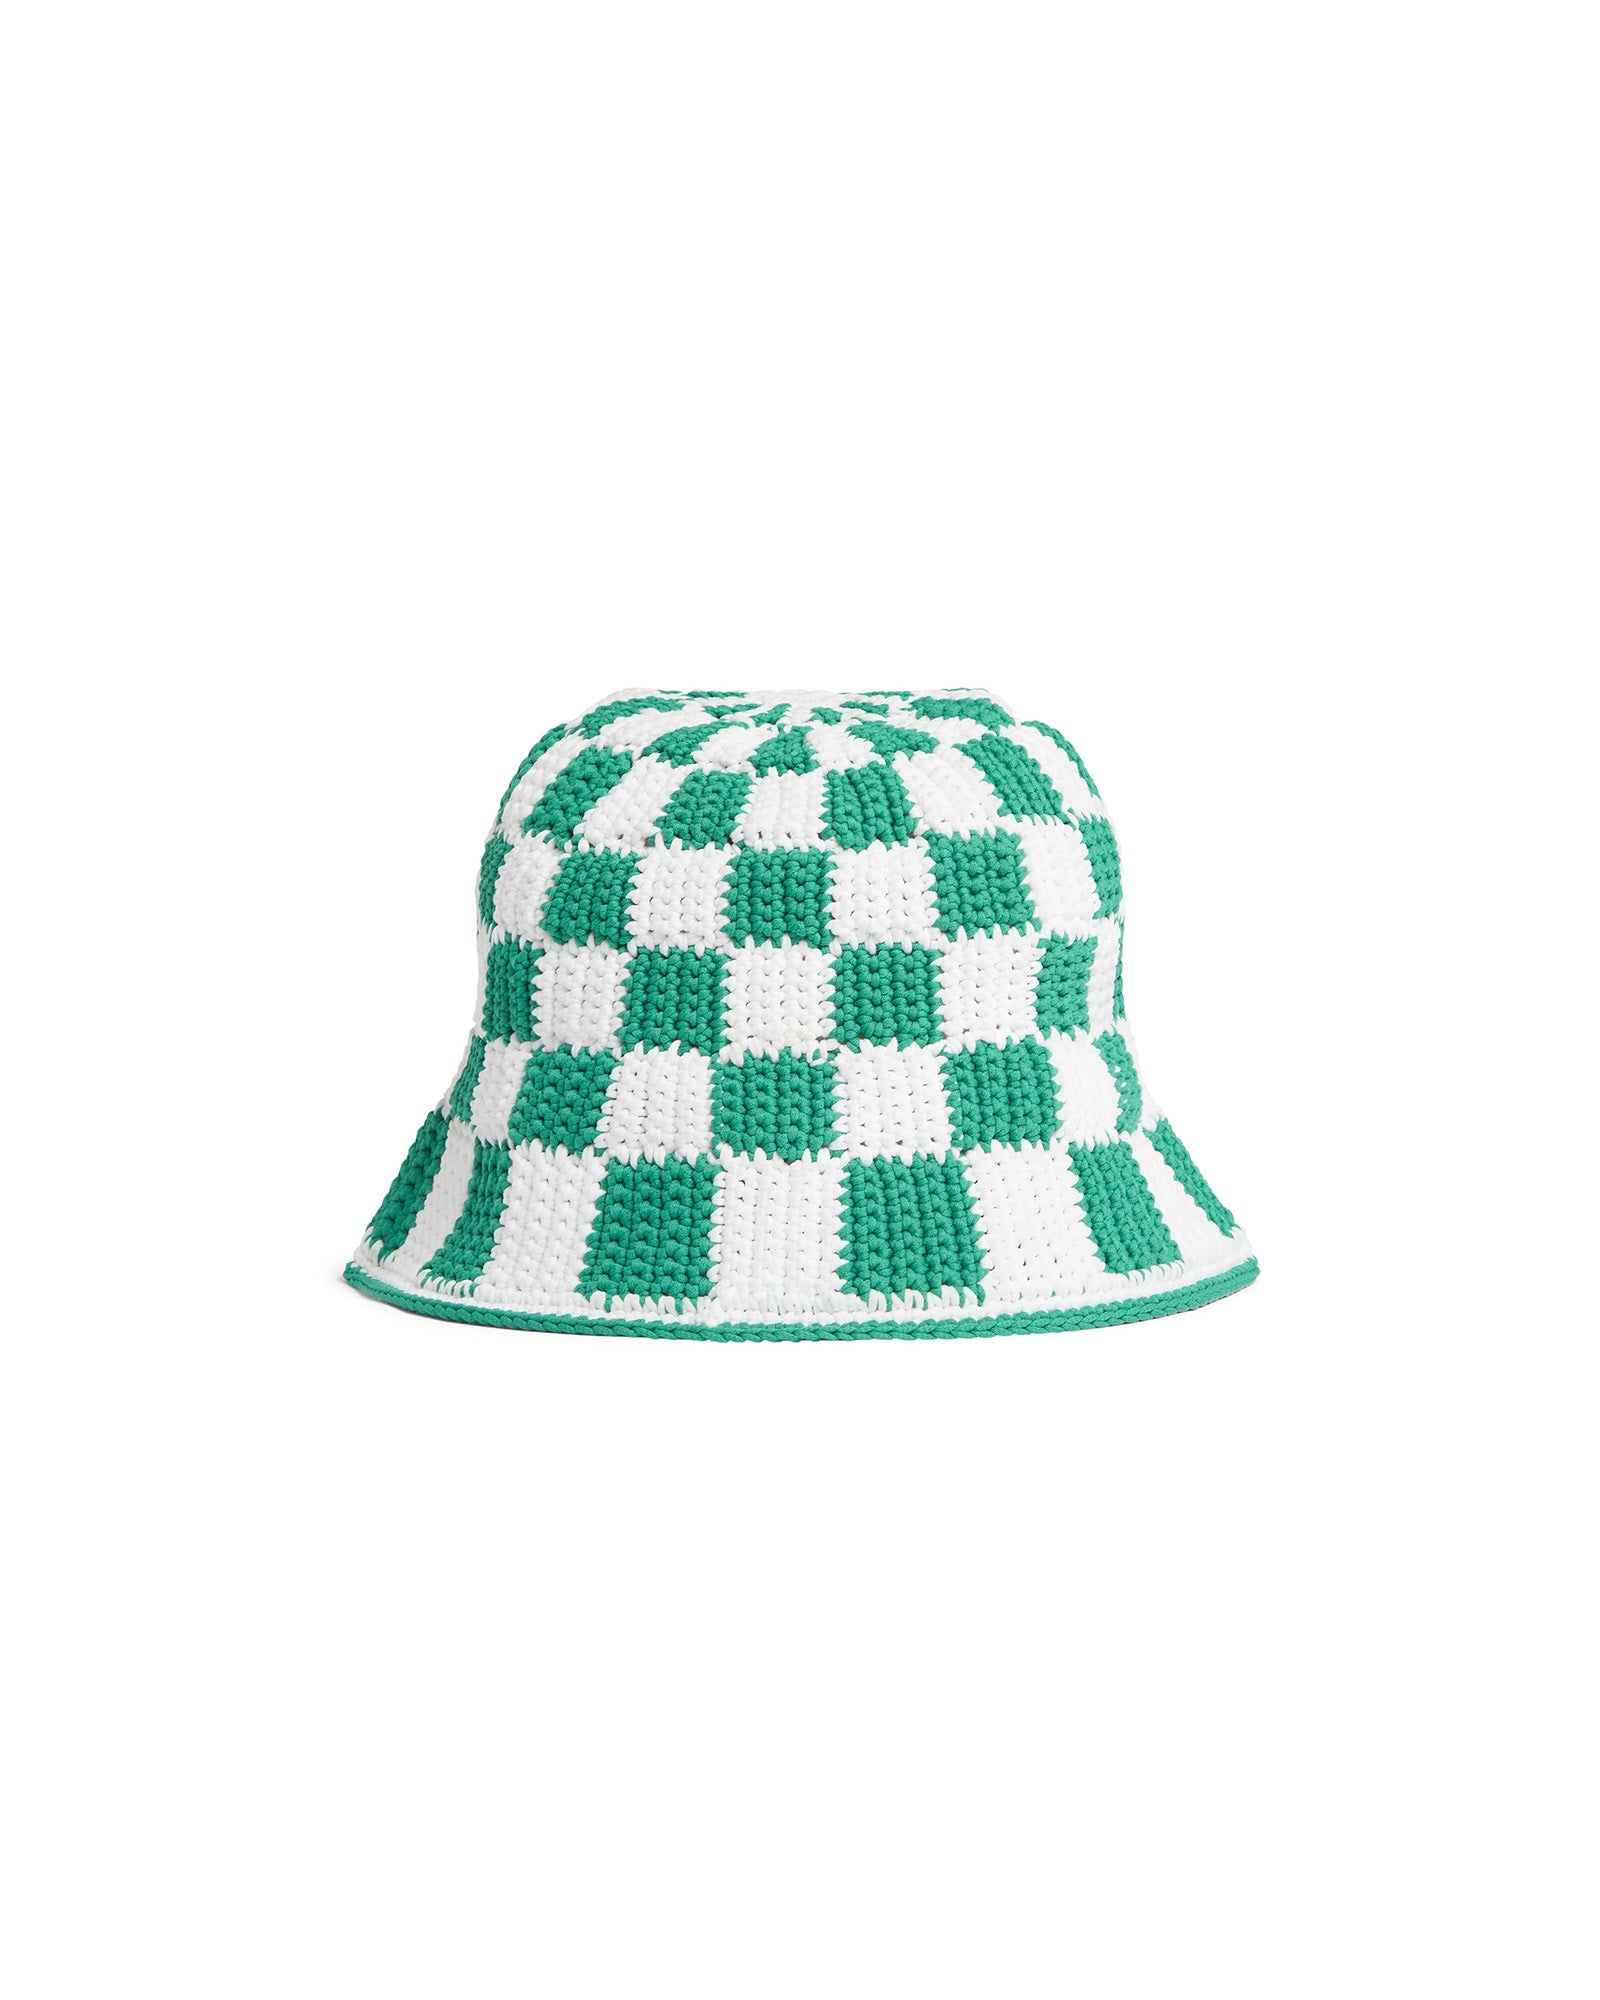 Scuba Square Crochet Hat - 2